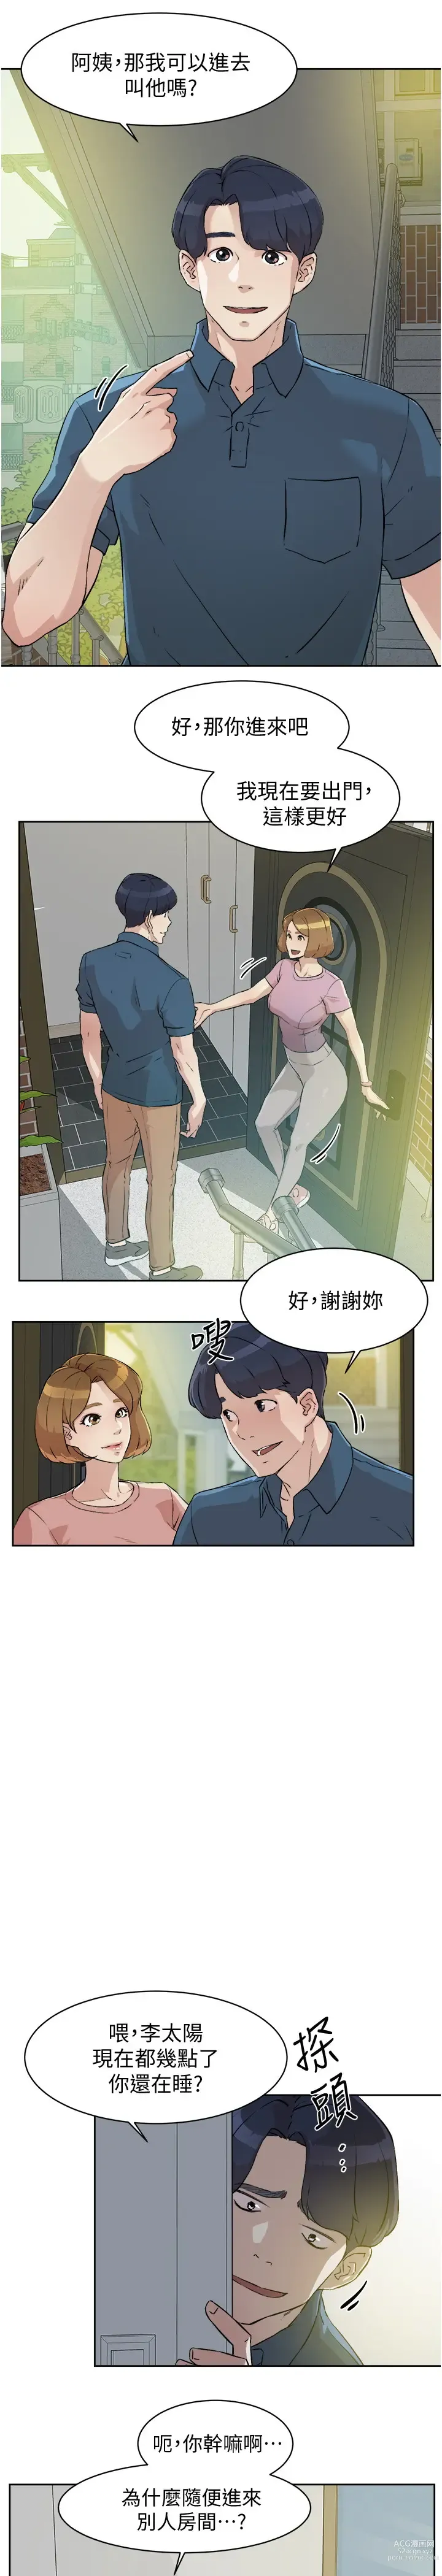 Page 8 of manga 好友的私生活